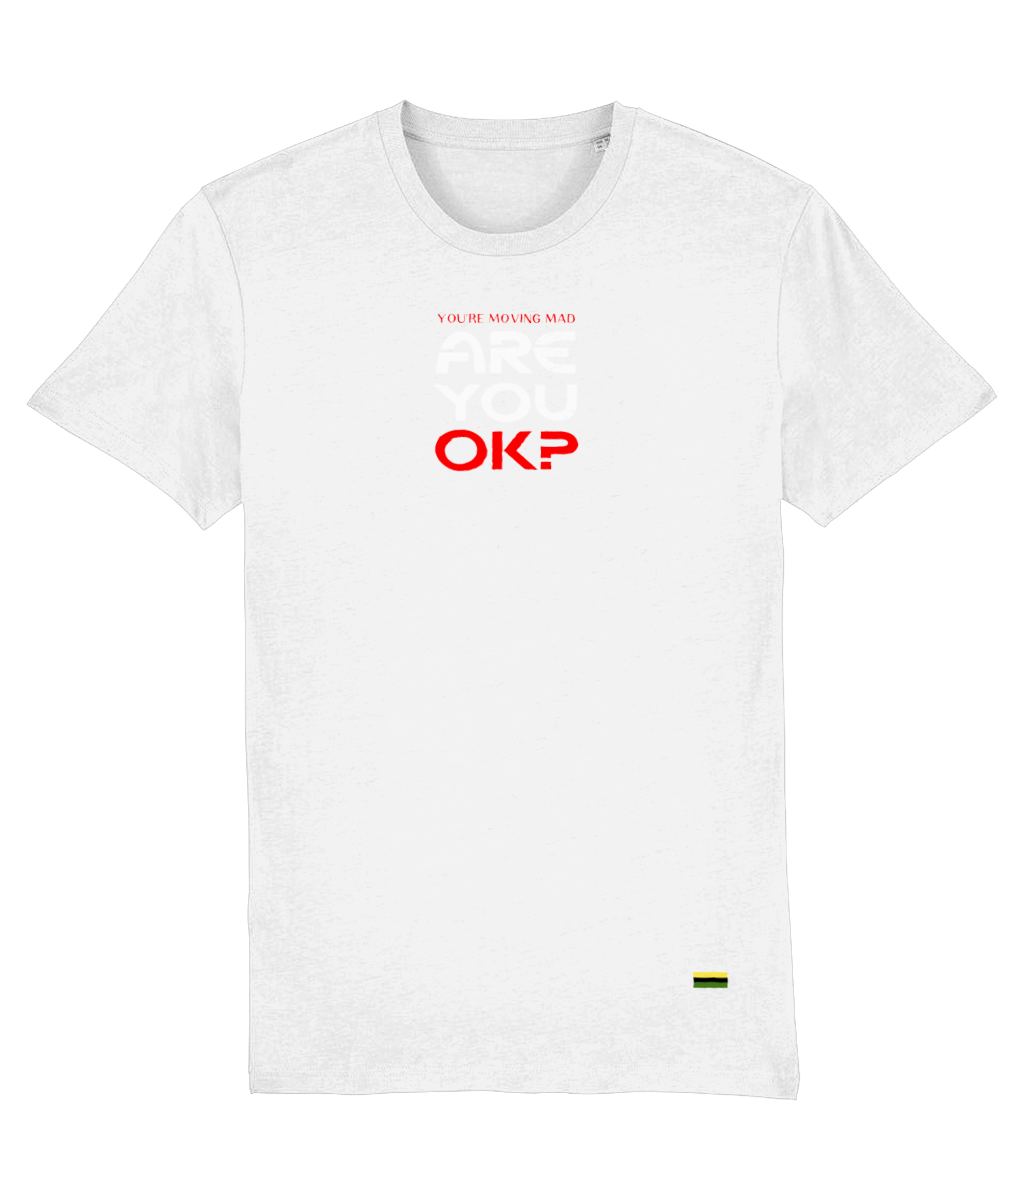 Are you OK? | Organic Cotton Unisex T Shirt